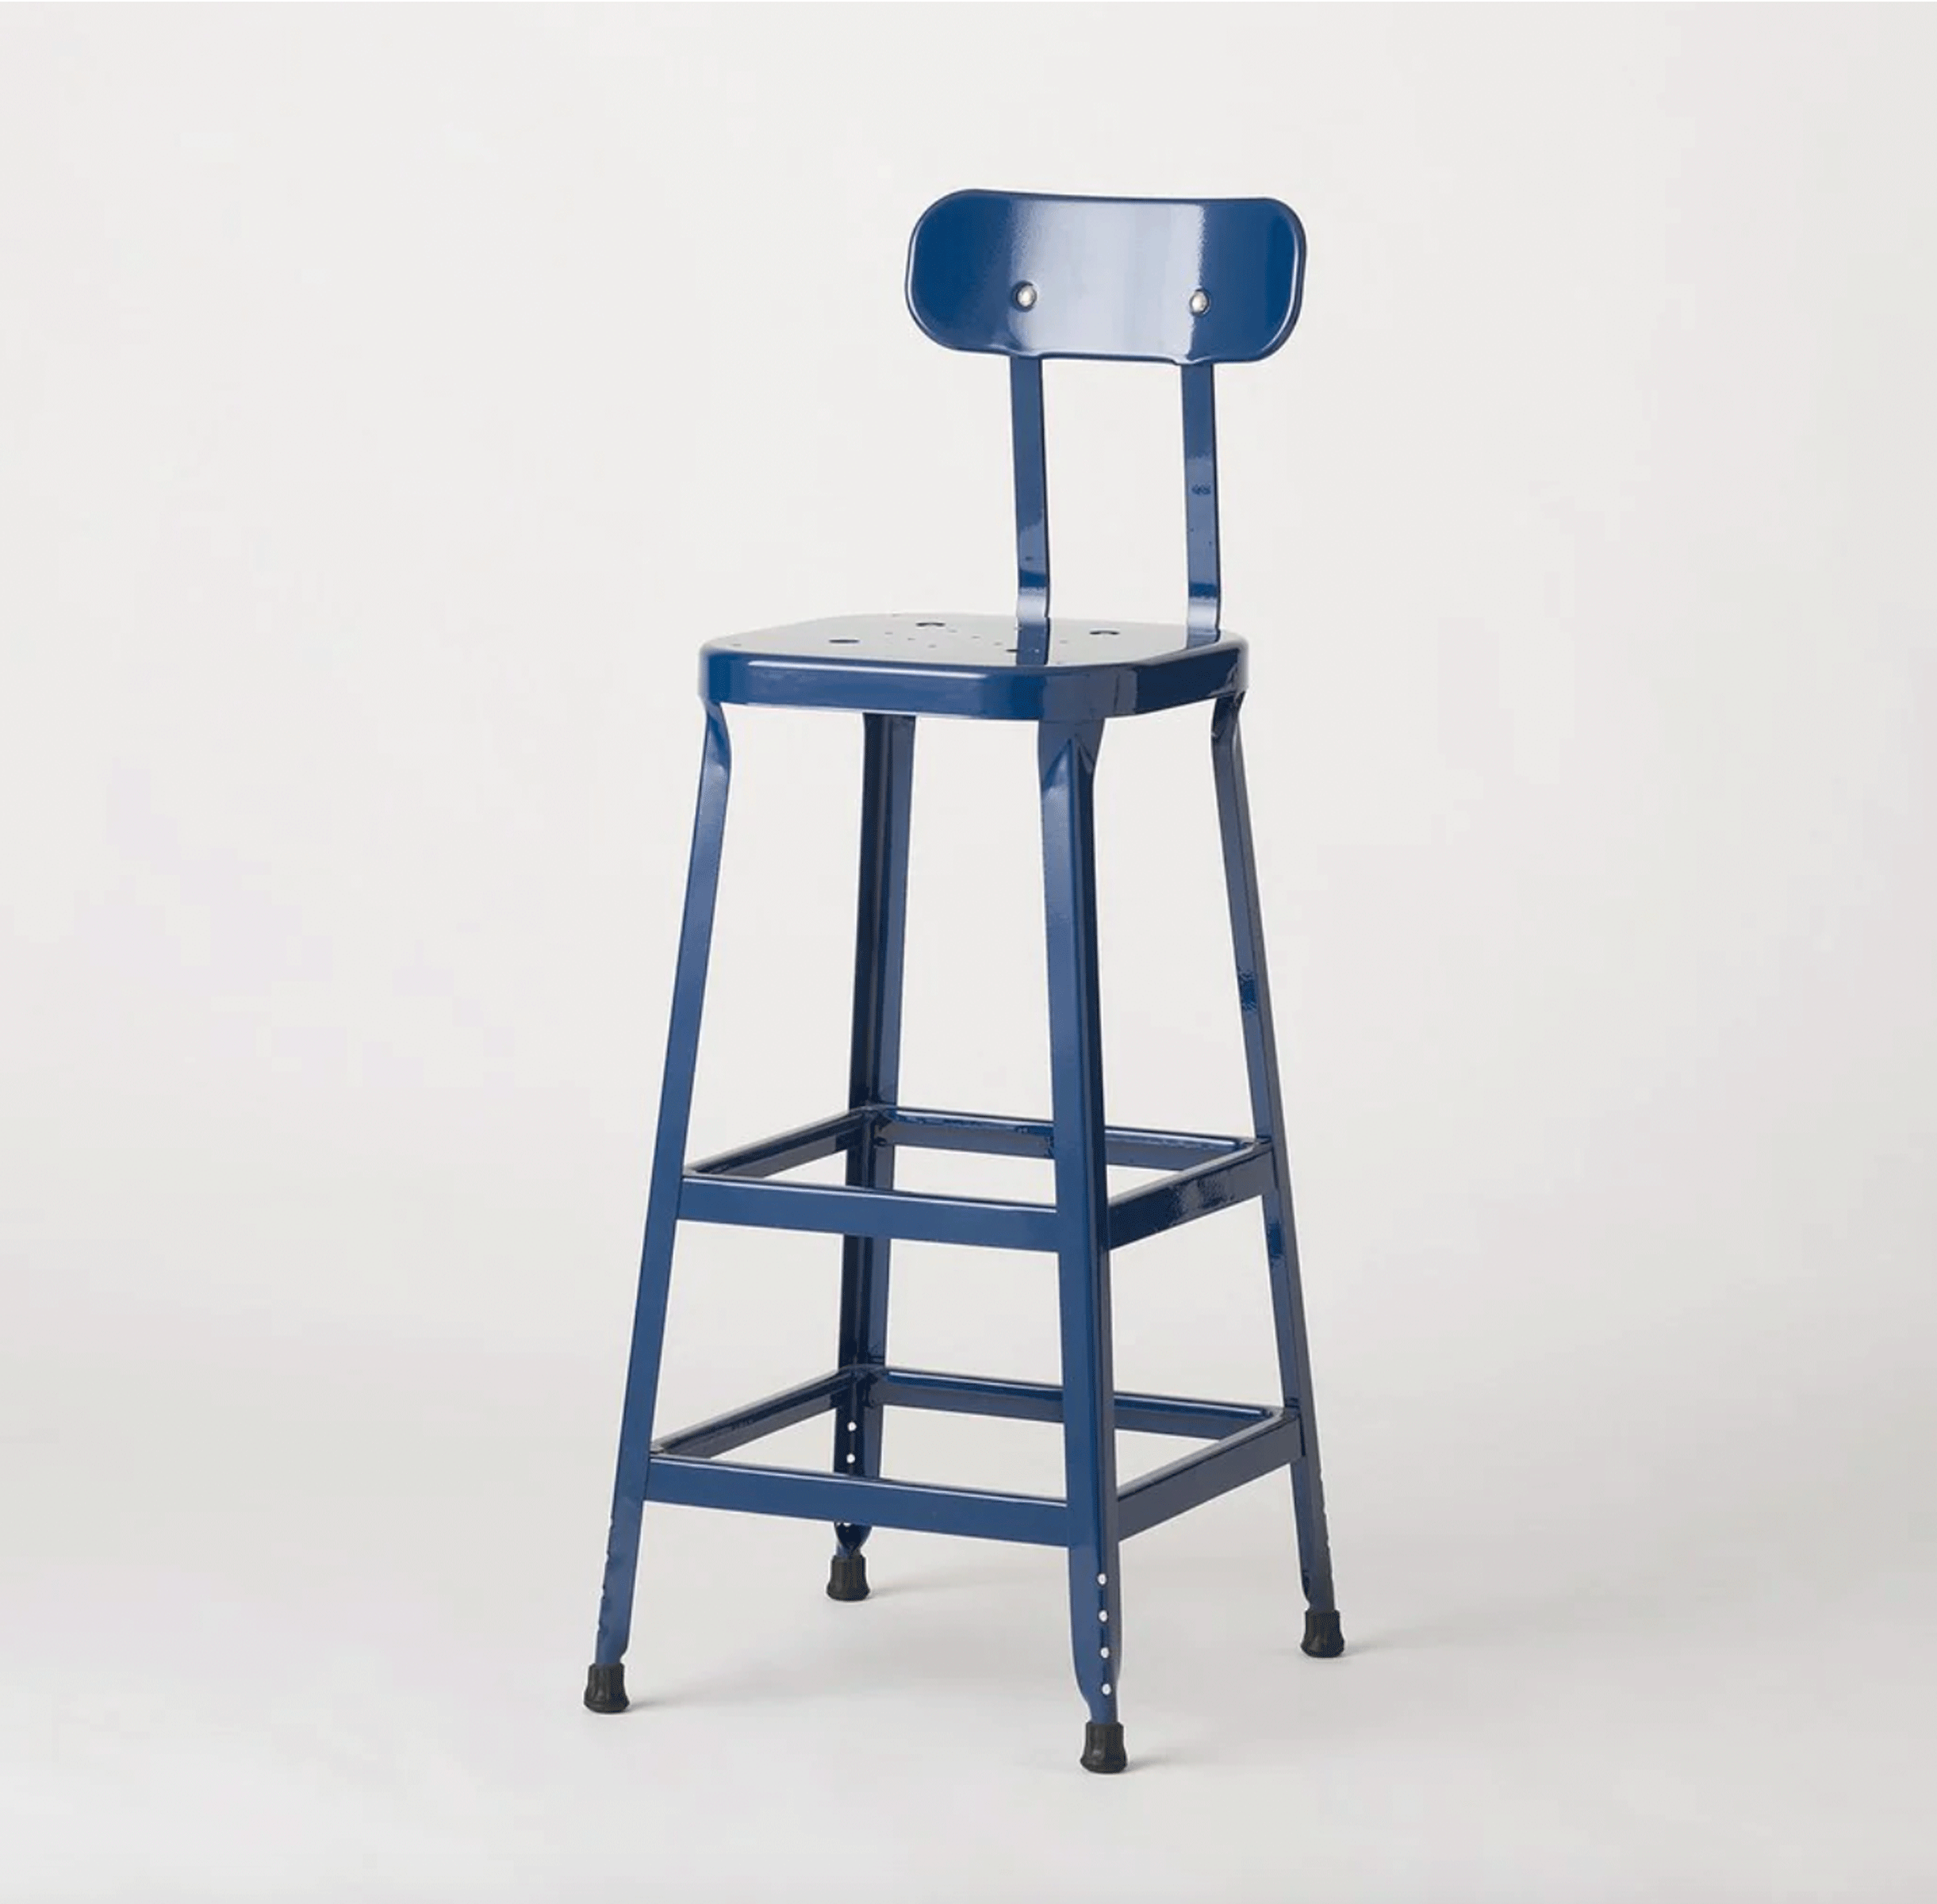 A blue industrial metal stool